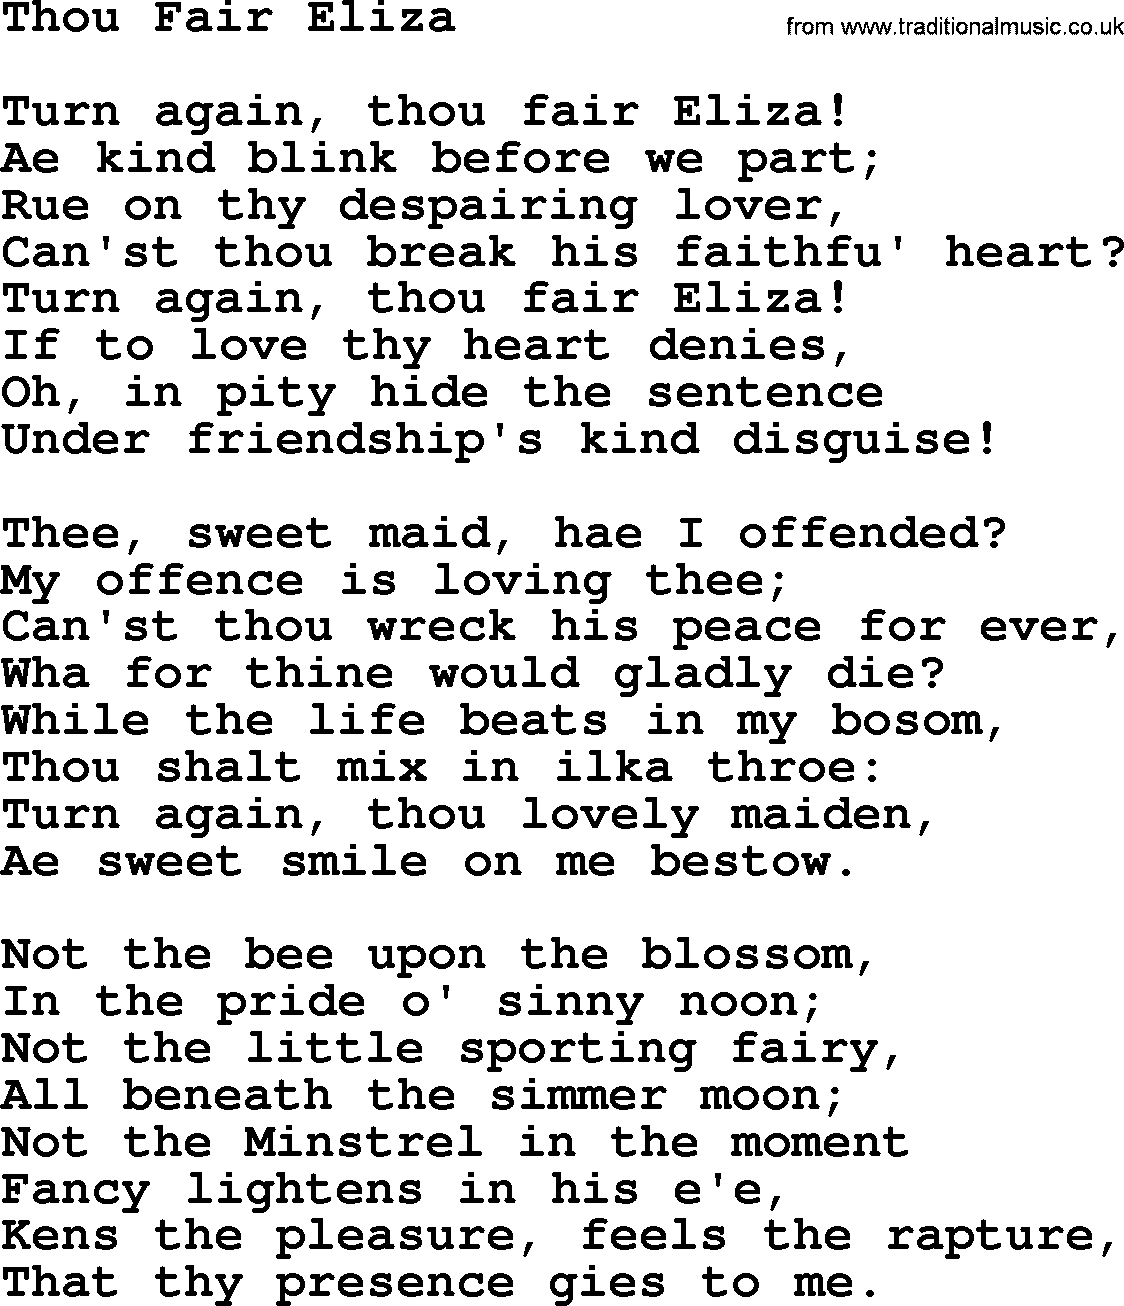 Robert Burns Songs & Lyrics: Thou Fair Eliza